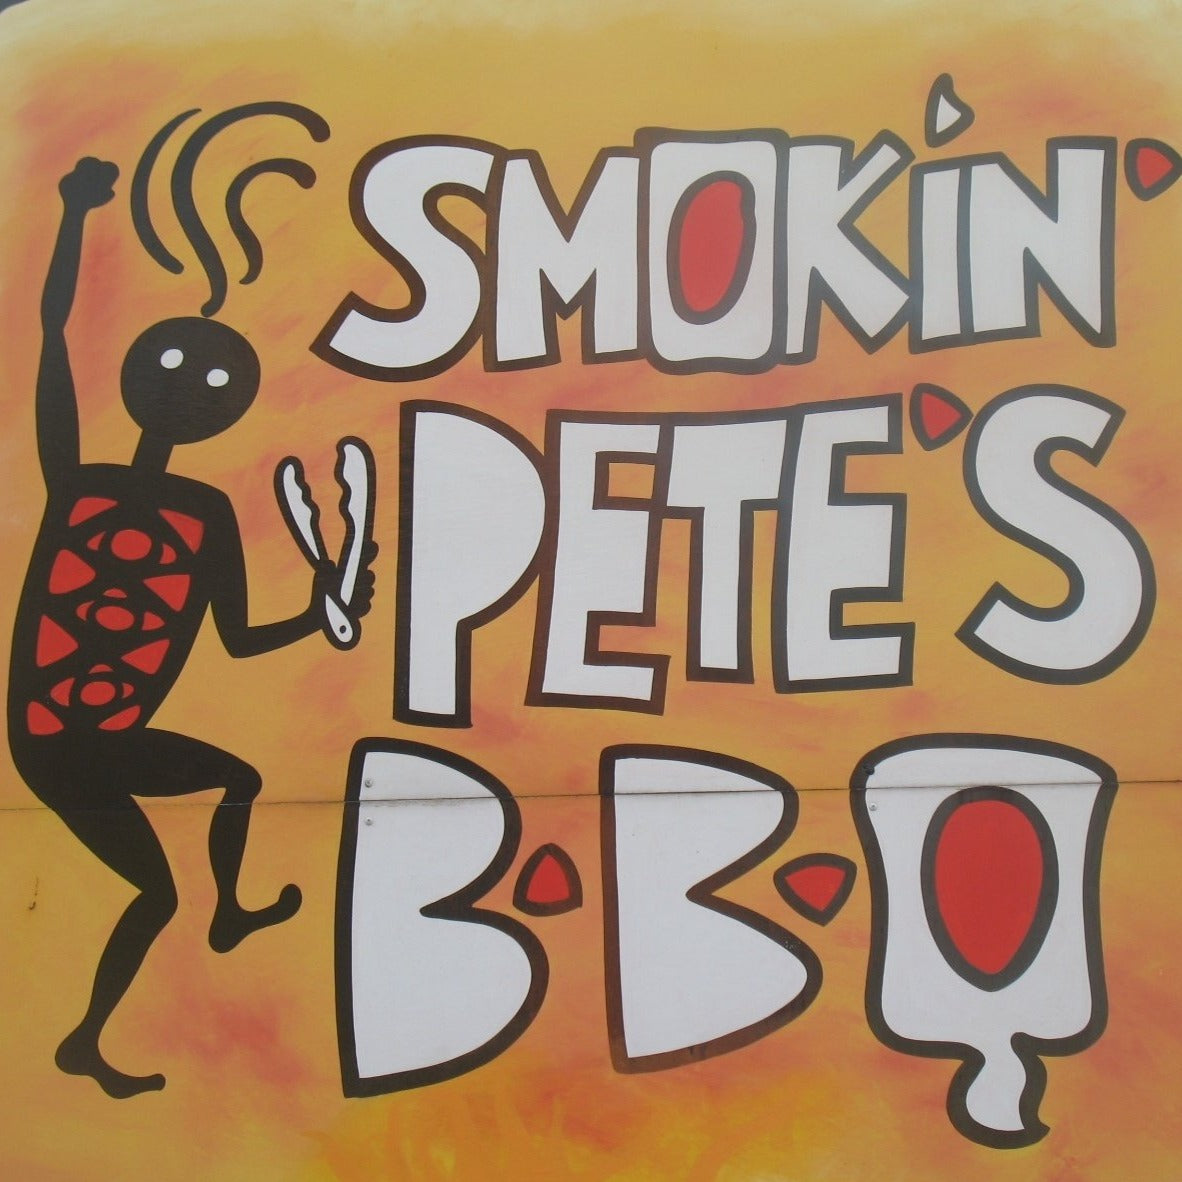 SMOKIN' PETES BBQ